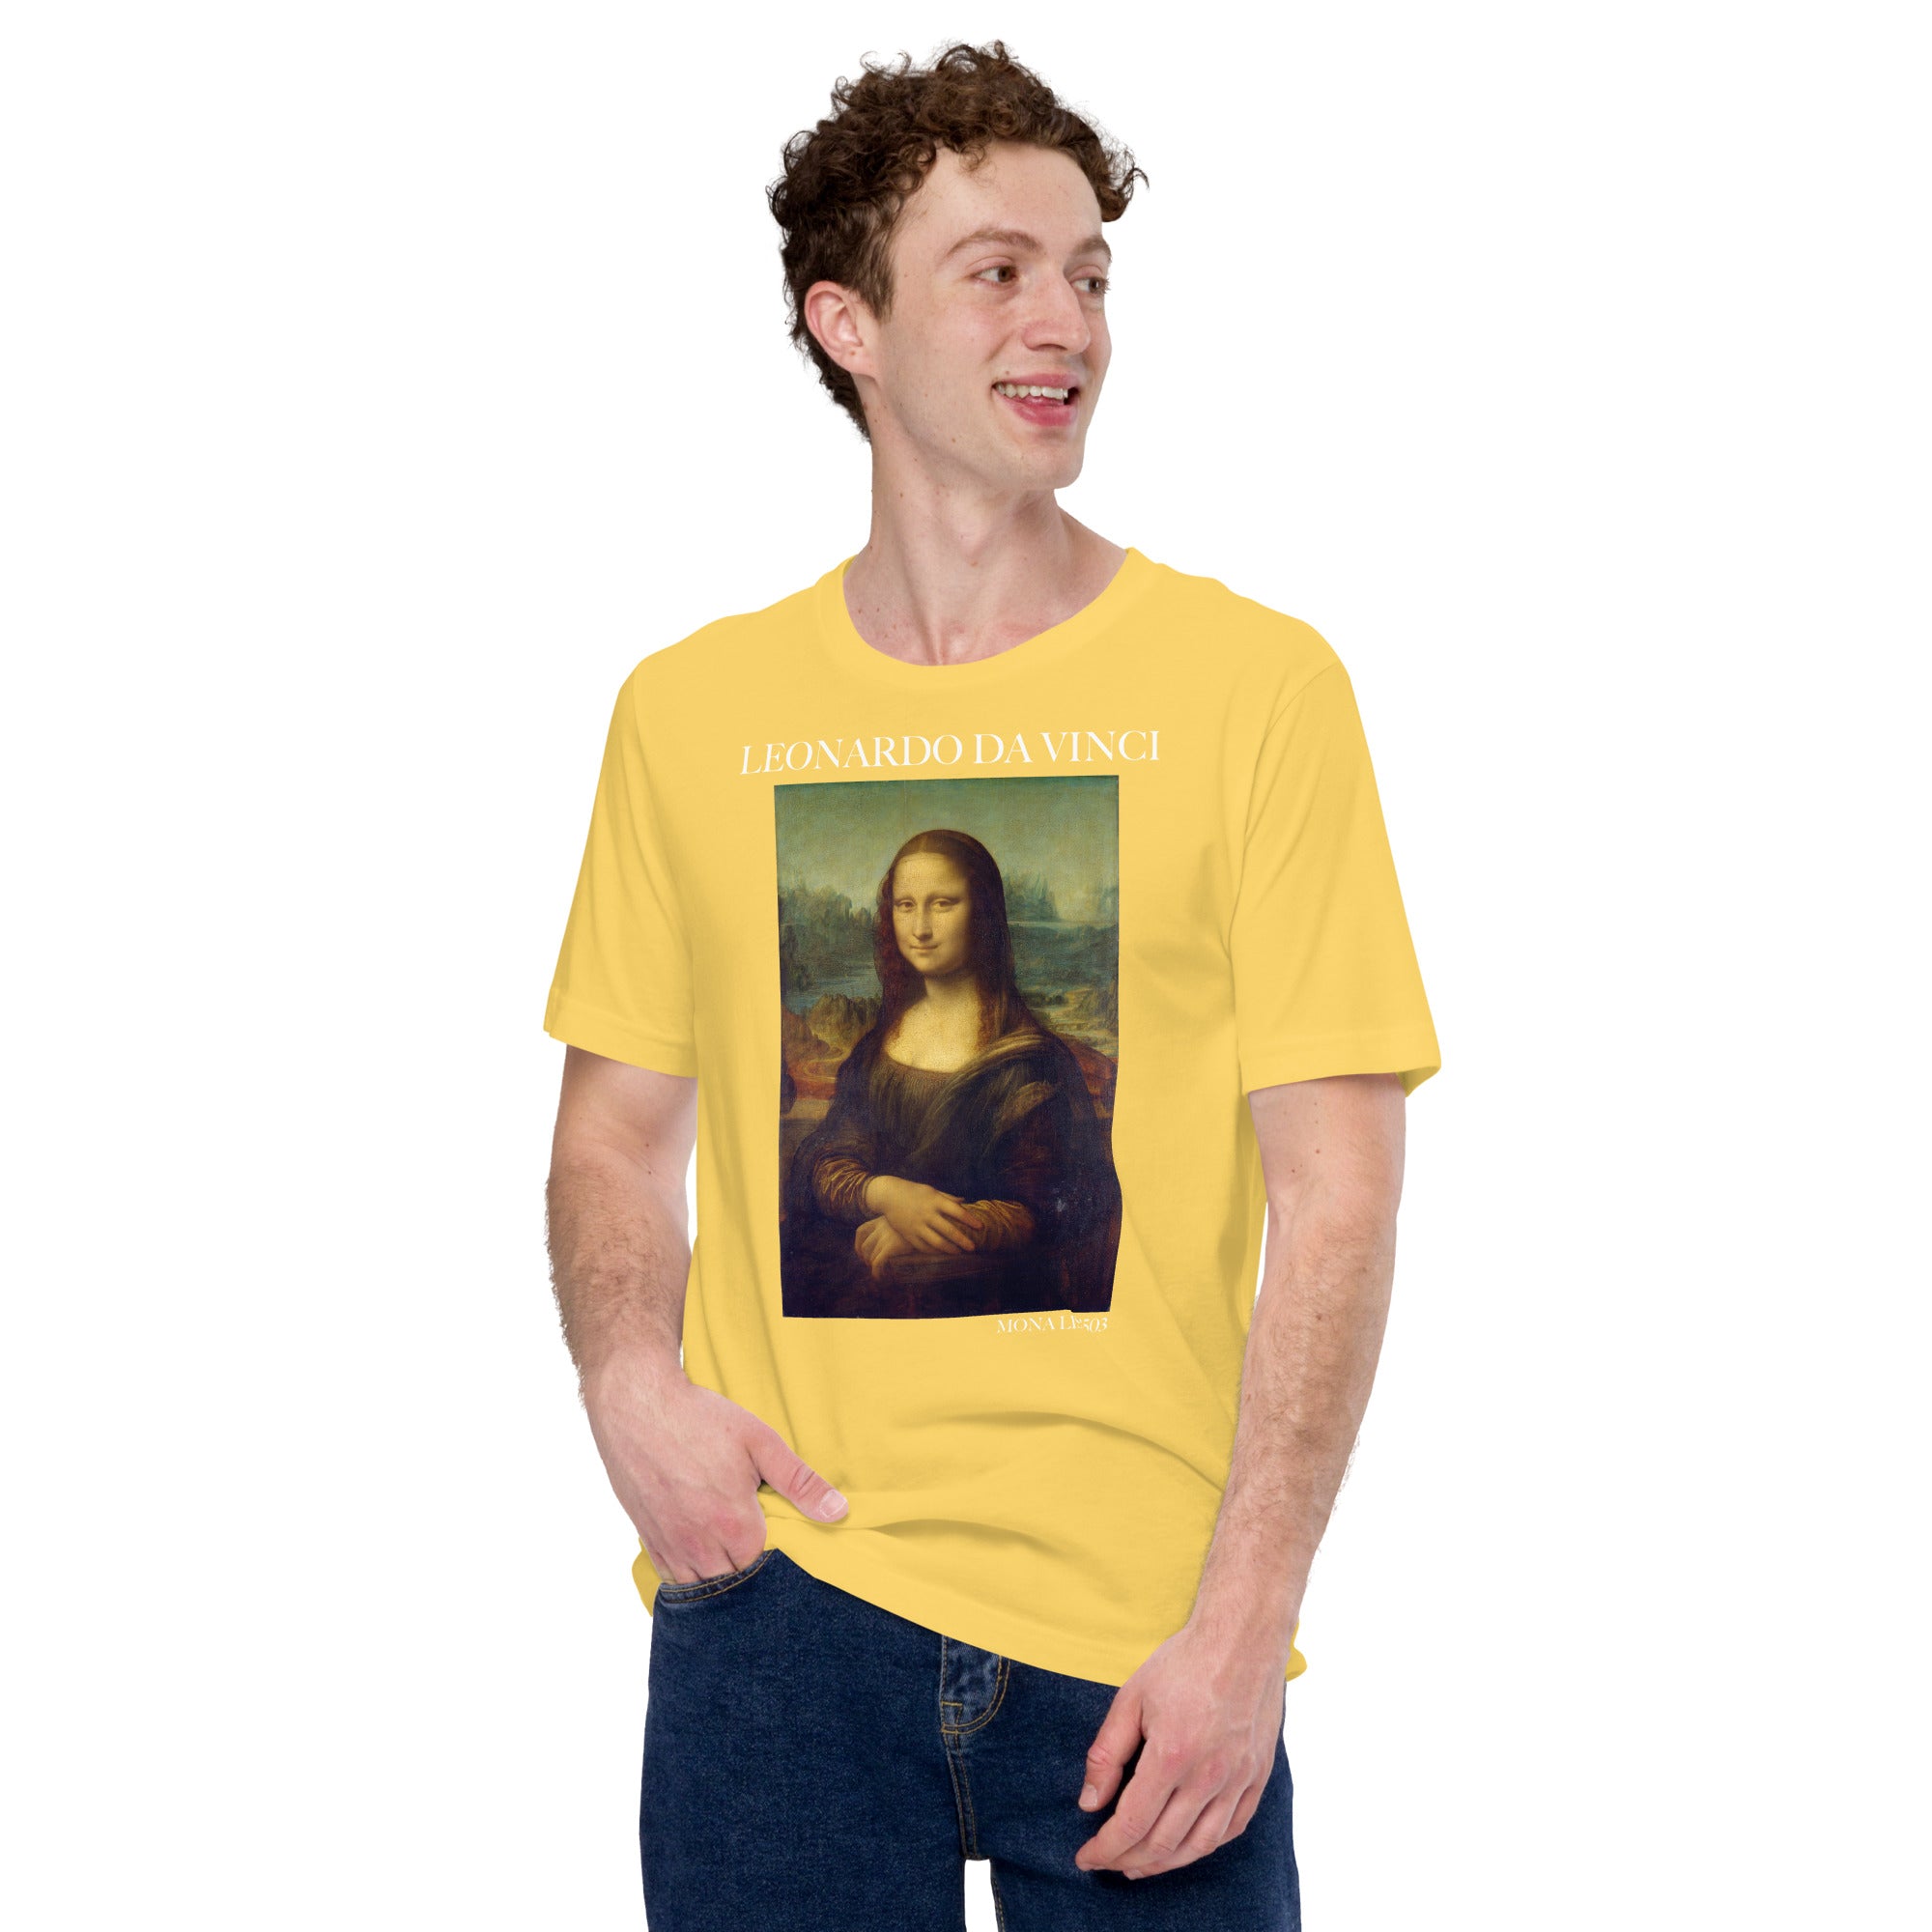 Leonardo da Vinci 'Mona Lisa' Famous Painting T-Shirt | Unisex Classic Art Tee